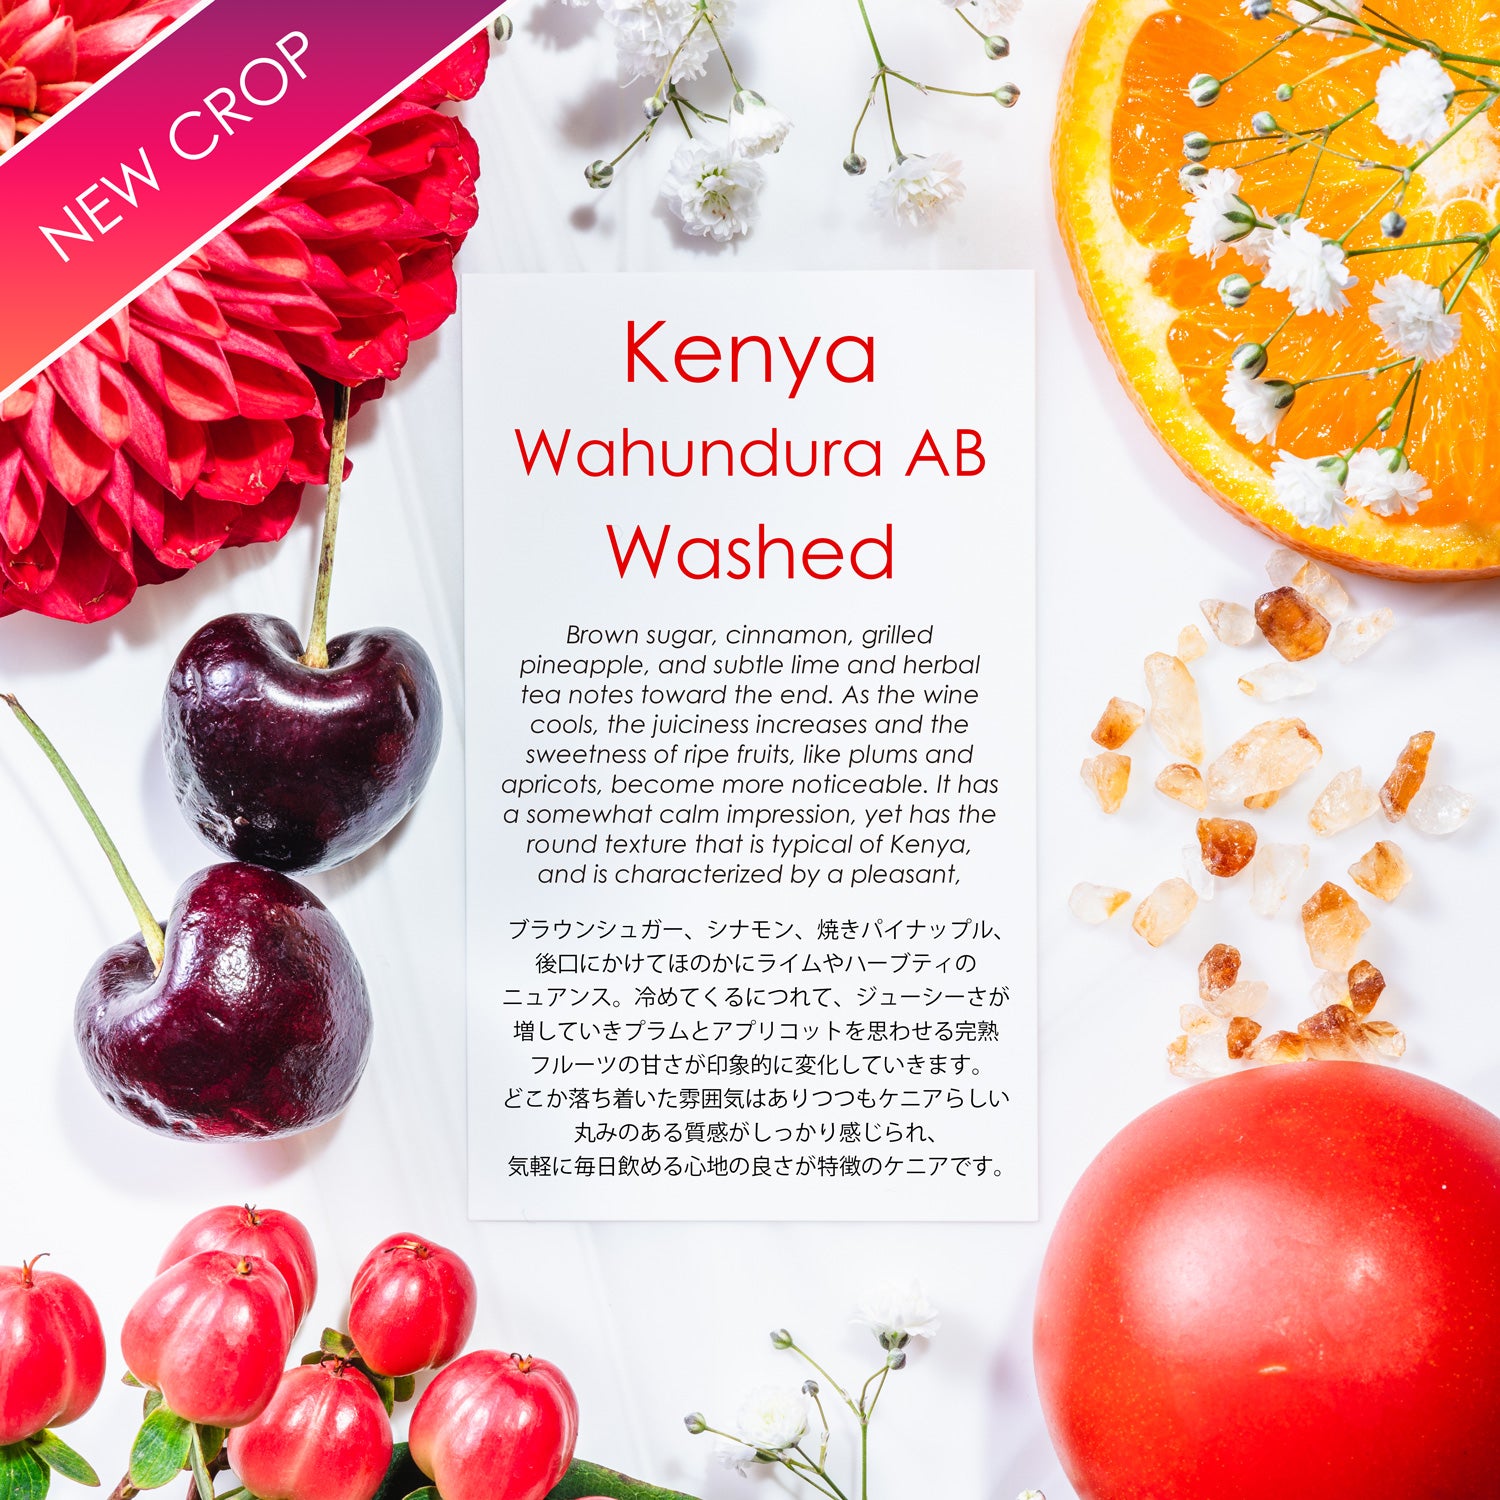 Kenya Wahundura AB Washed [Juicy plum & Brown Sugar]